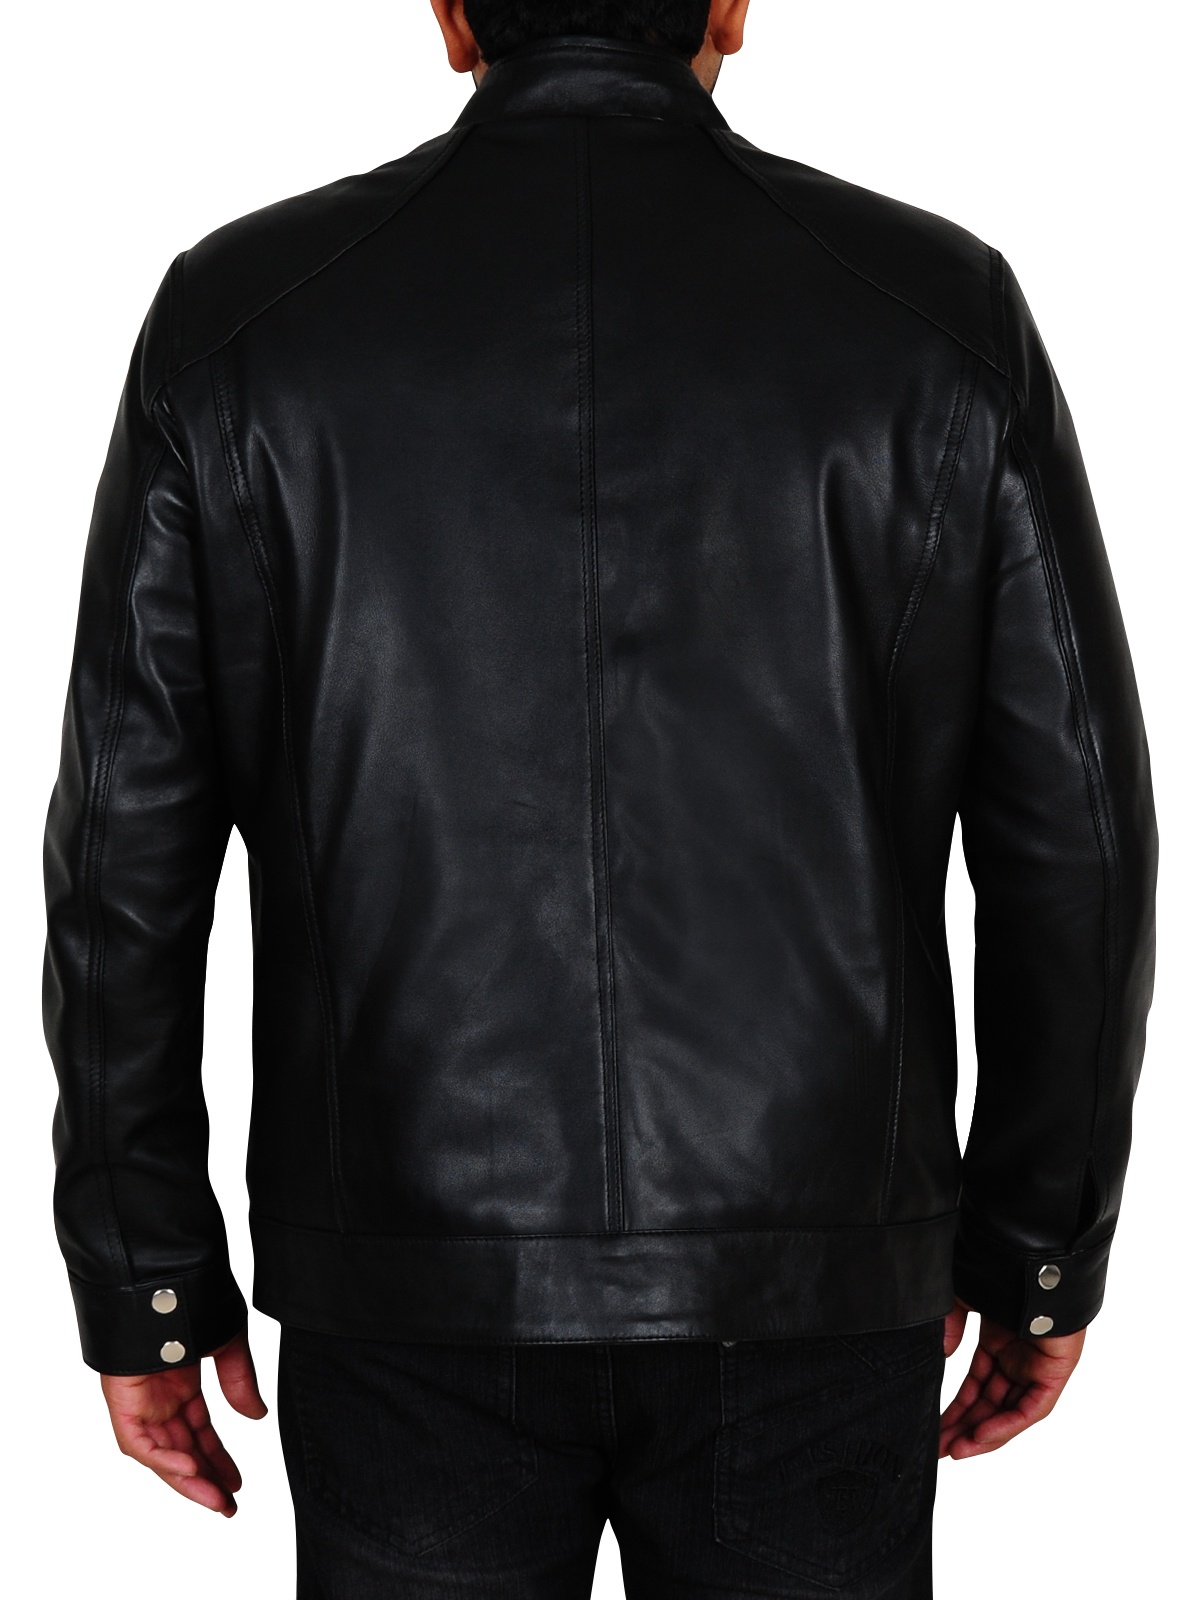 Bradley Cooper Limitless Leather Jacket - AirBorne Jacket